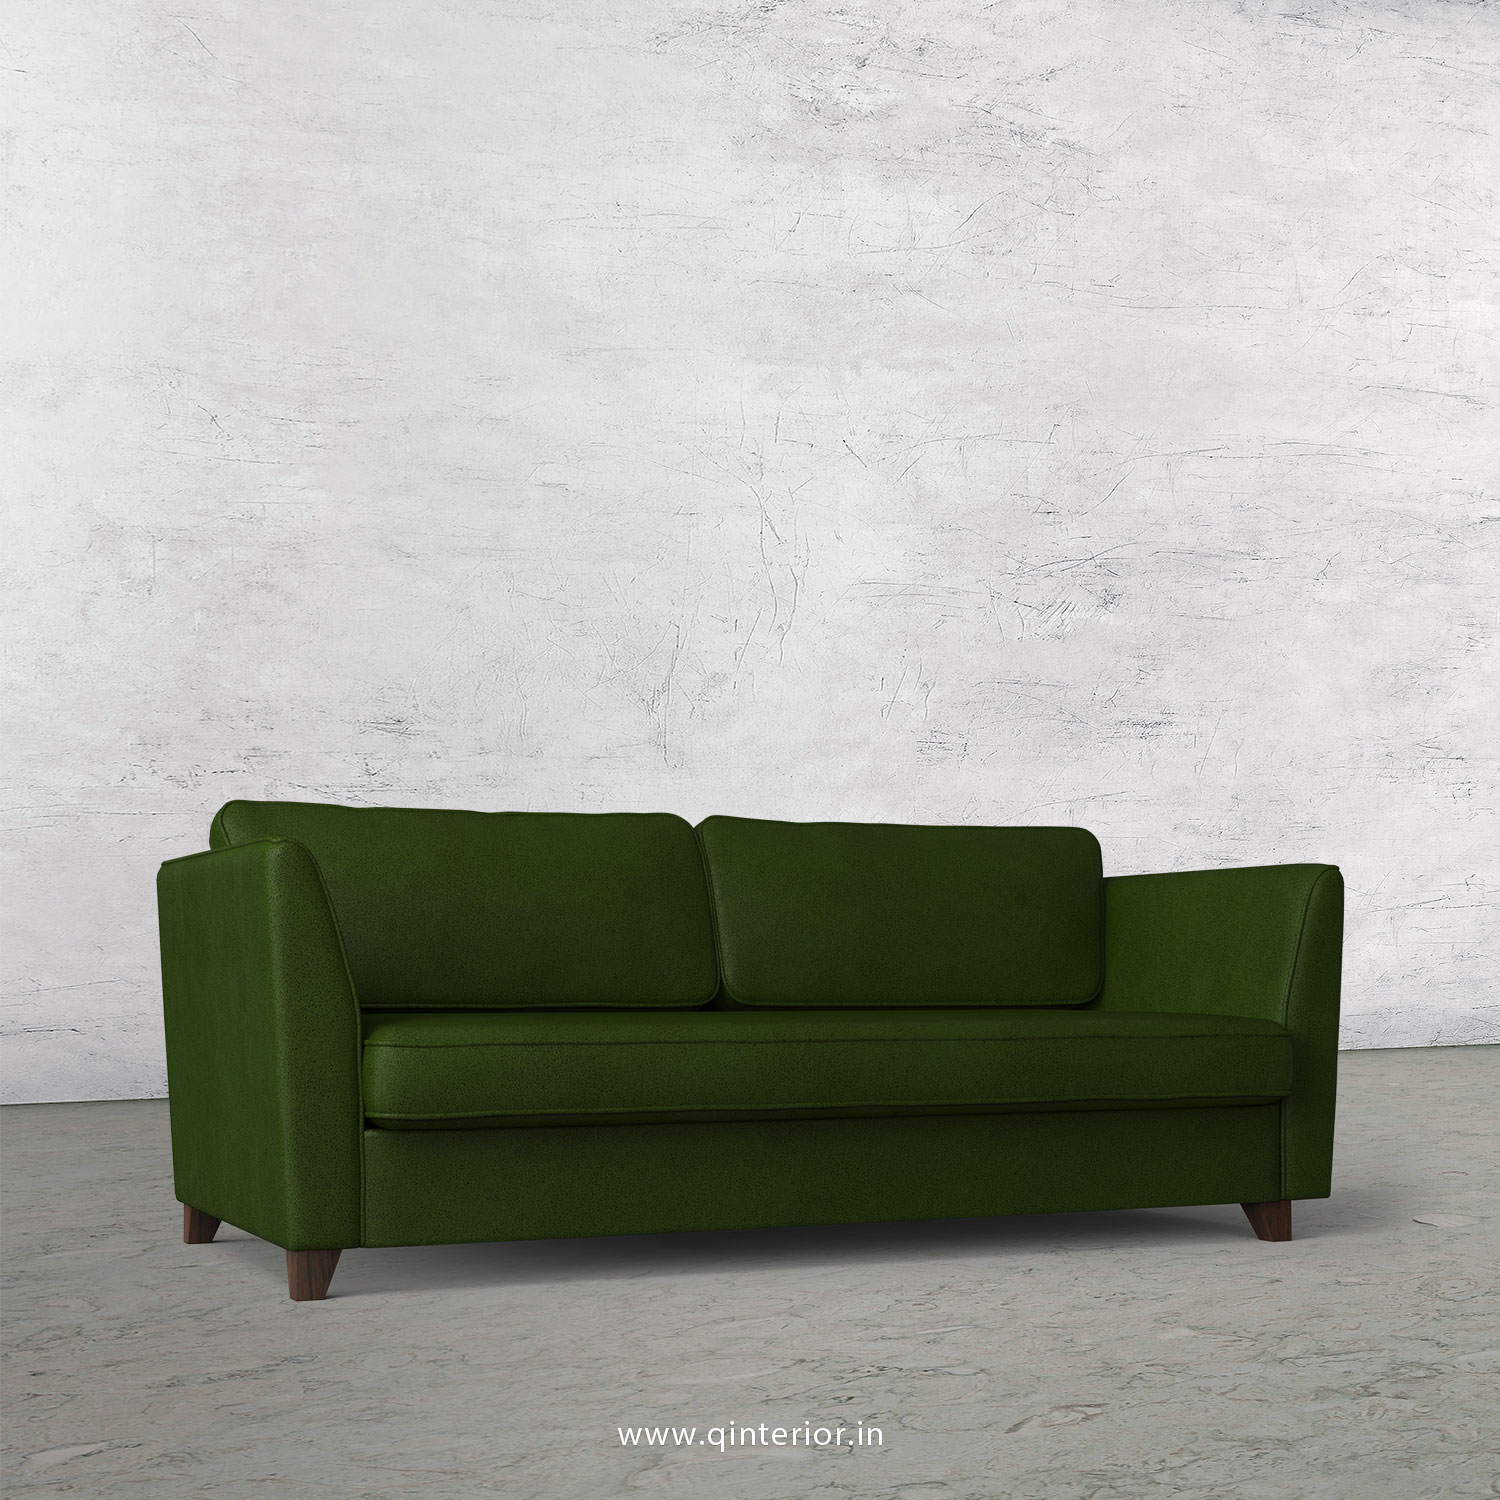 KINGSTONE 3 Seater Sofa in Fab Leather Fabric - SFA004 FL04